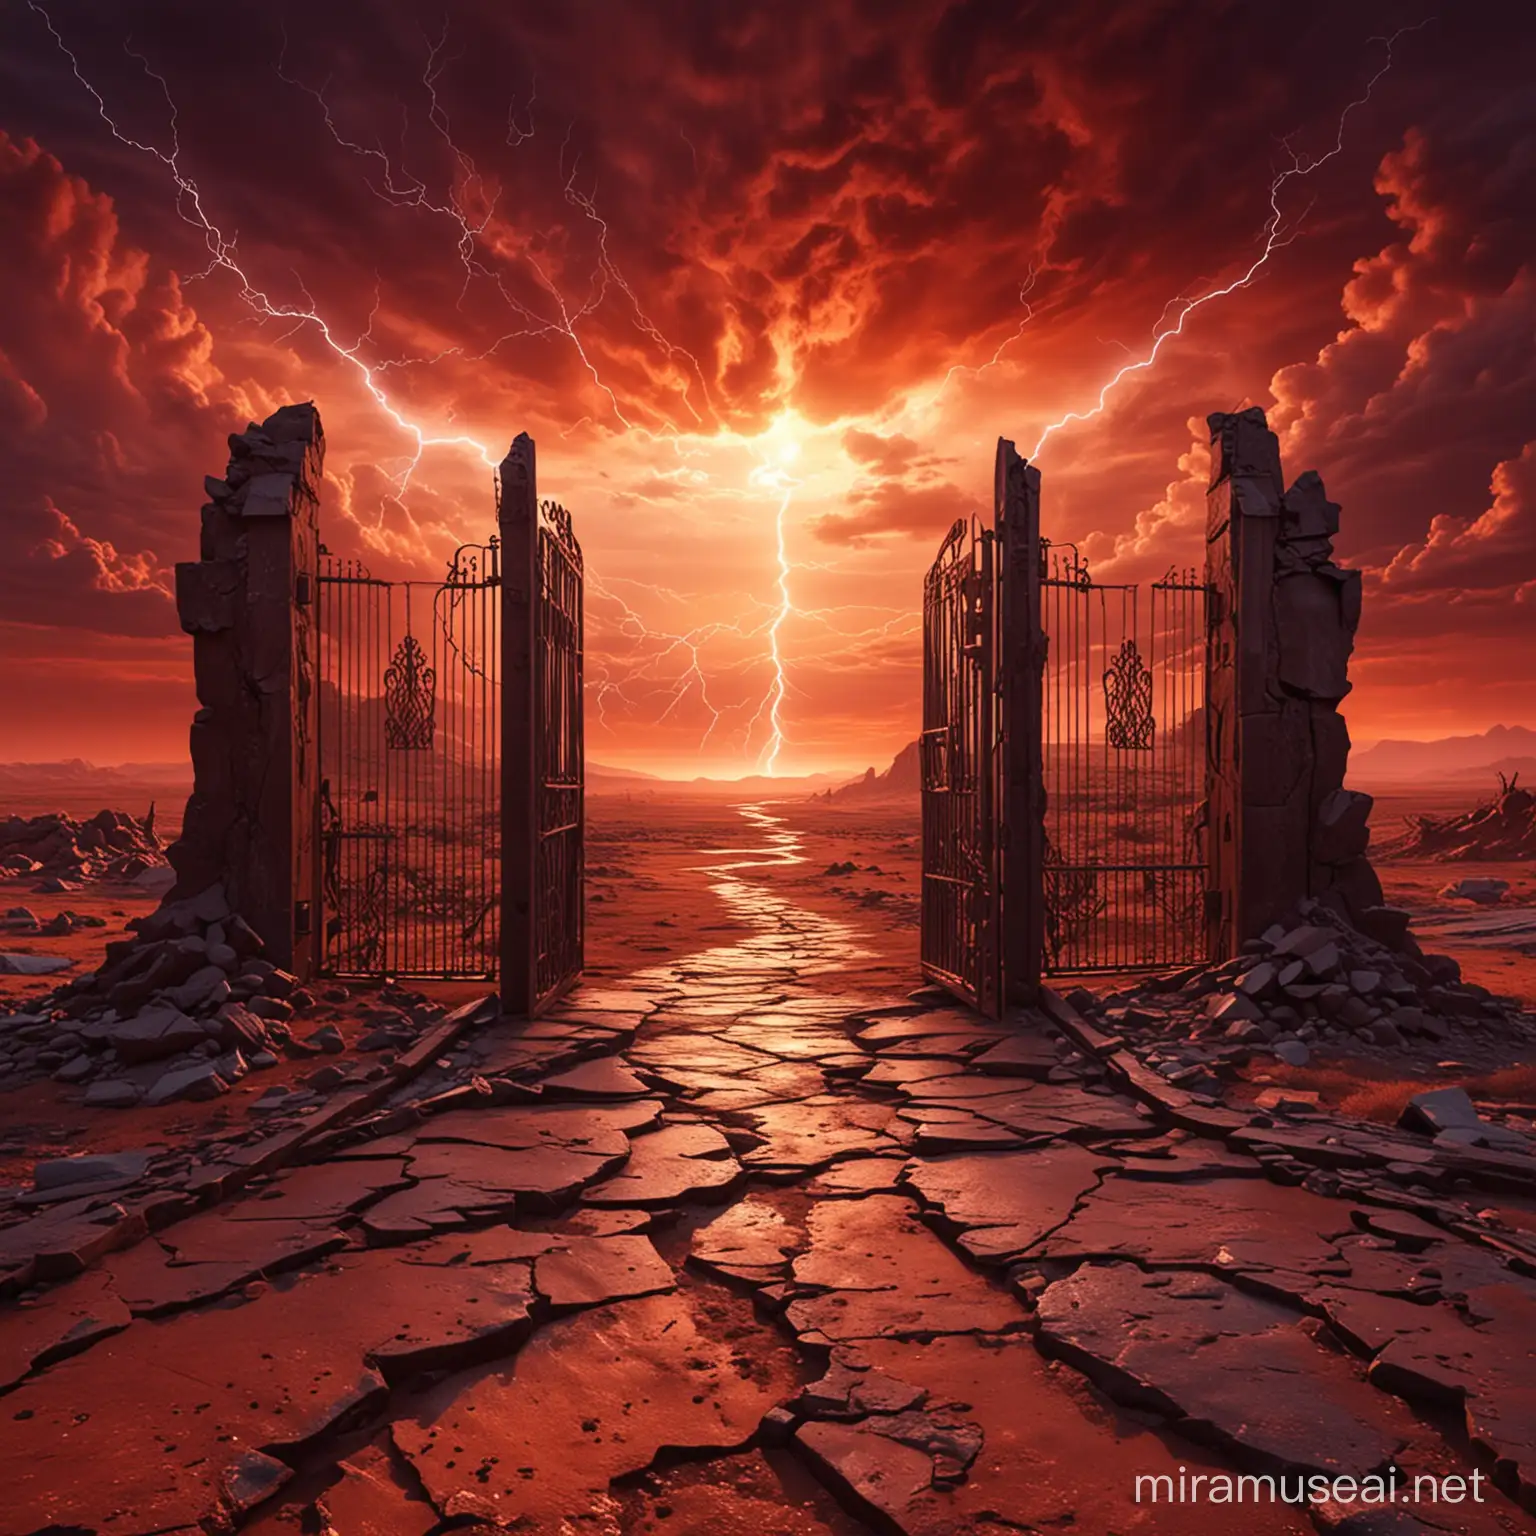 Apocalyptic Scene Gates of Hell Unleashing Fiery Destruction